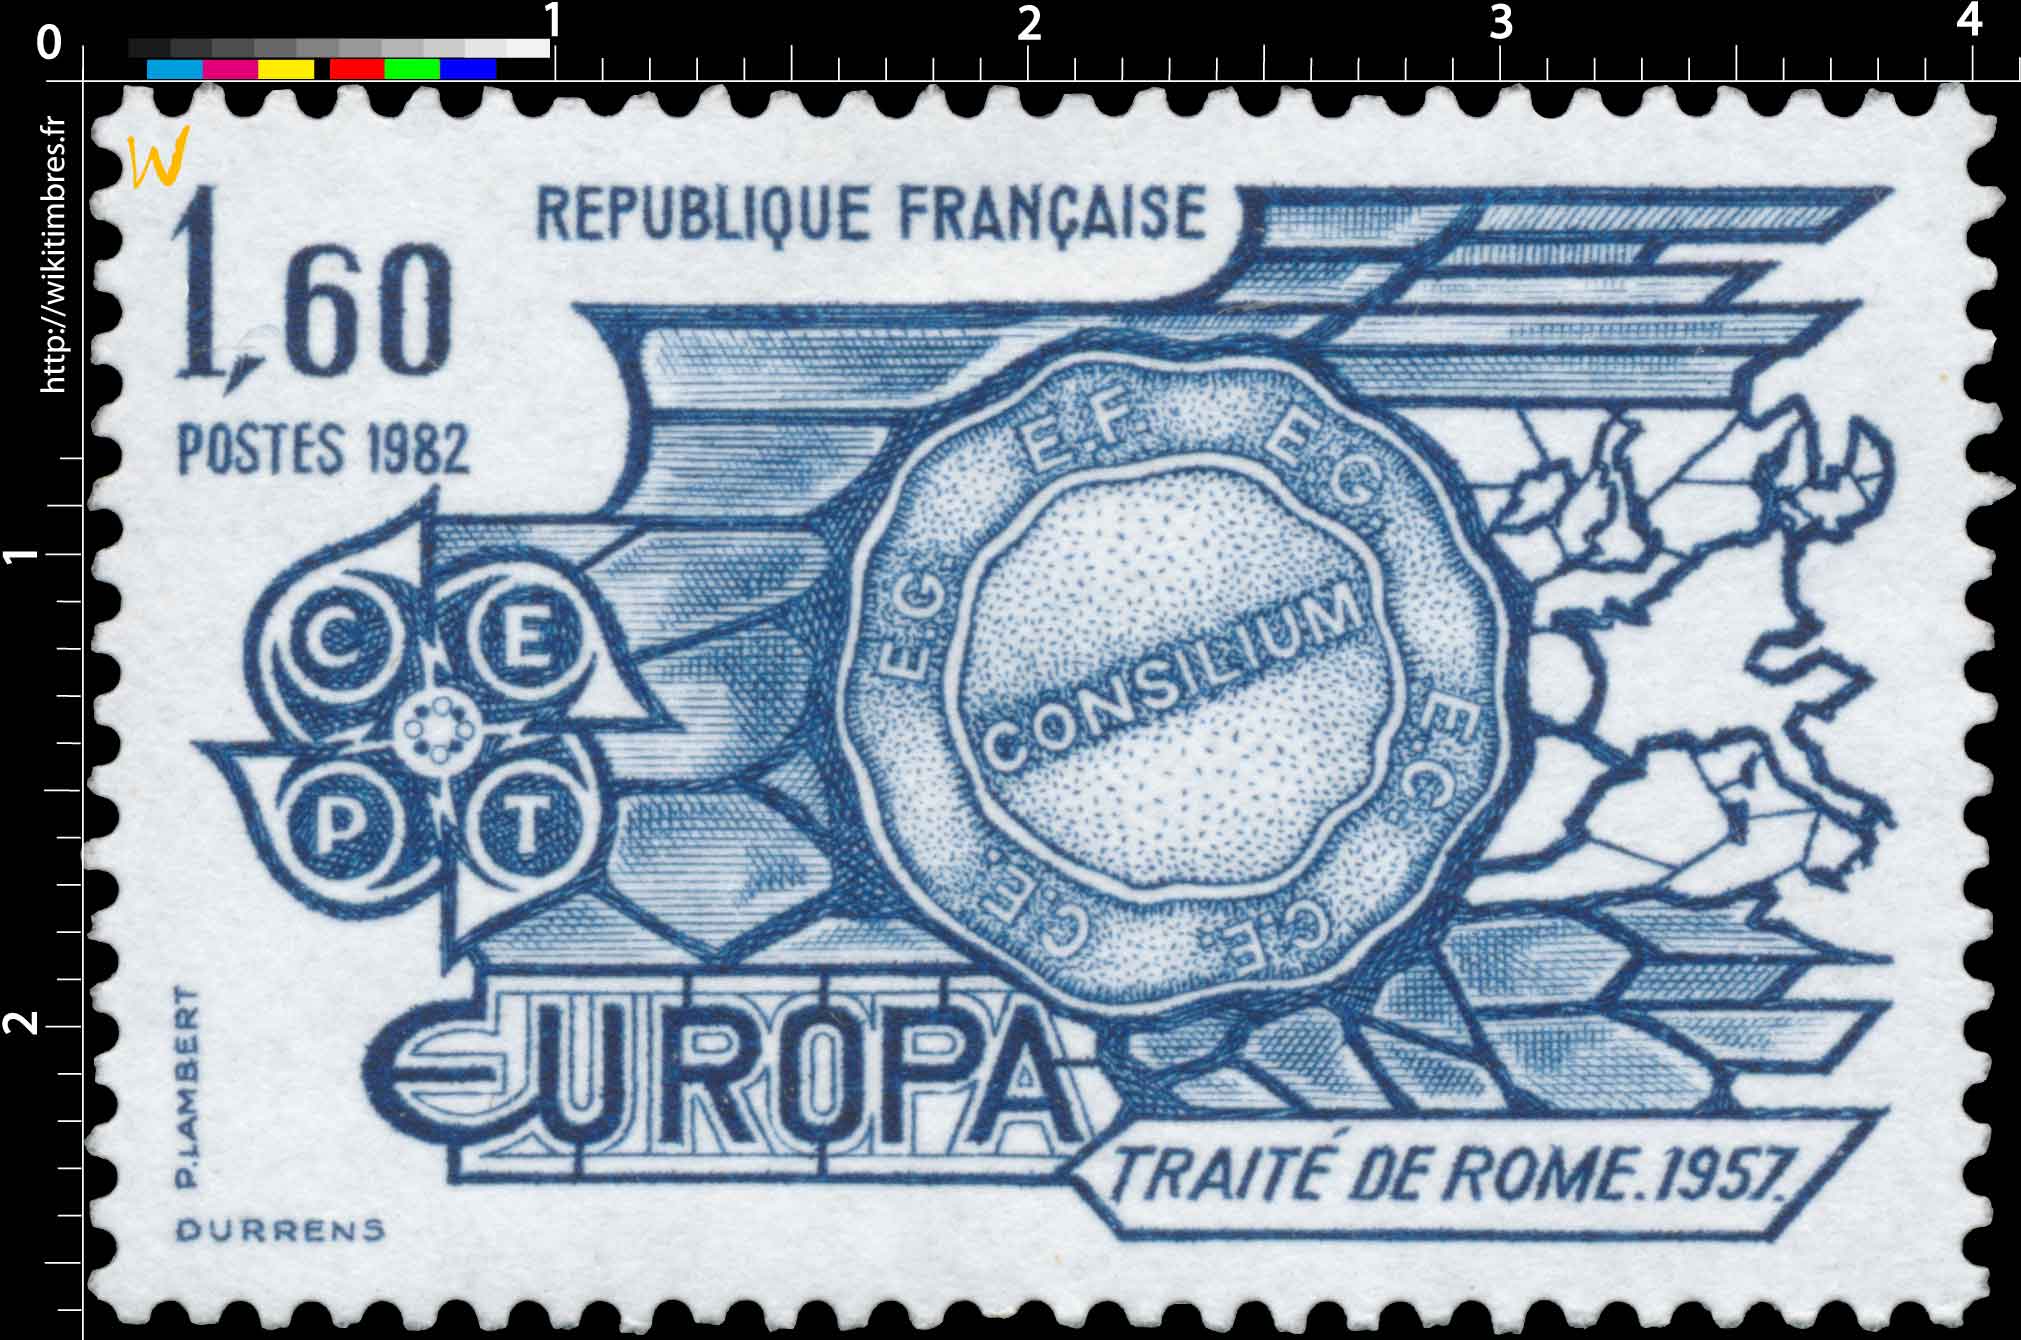 1982 EUROPA CEPT TRAITÉ DE ROME.1957. CONCILIUM CE. EG. EF. EC.